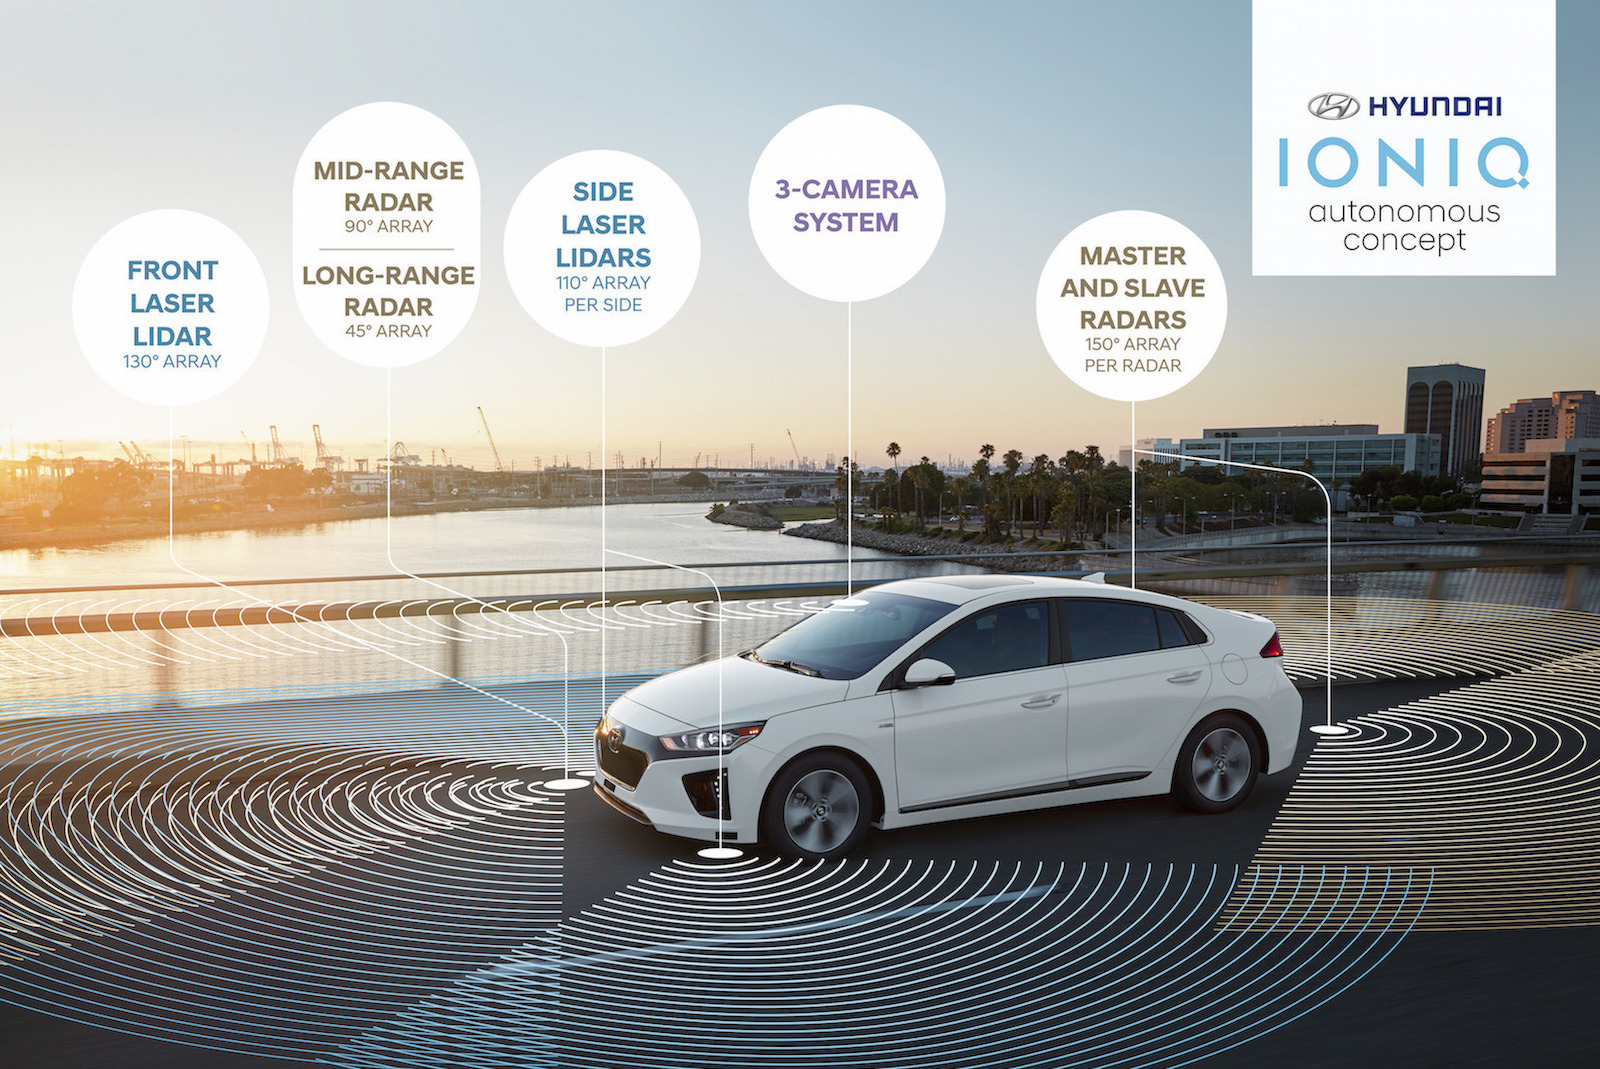 Hyundai to showcase autonomous IONIQ concepts at 2017 CES event